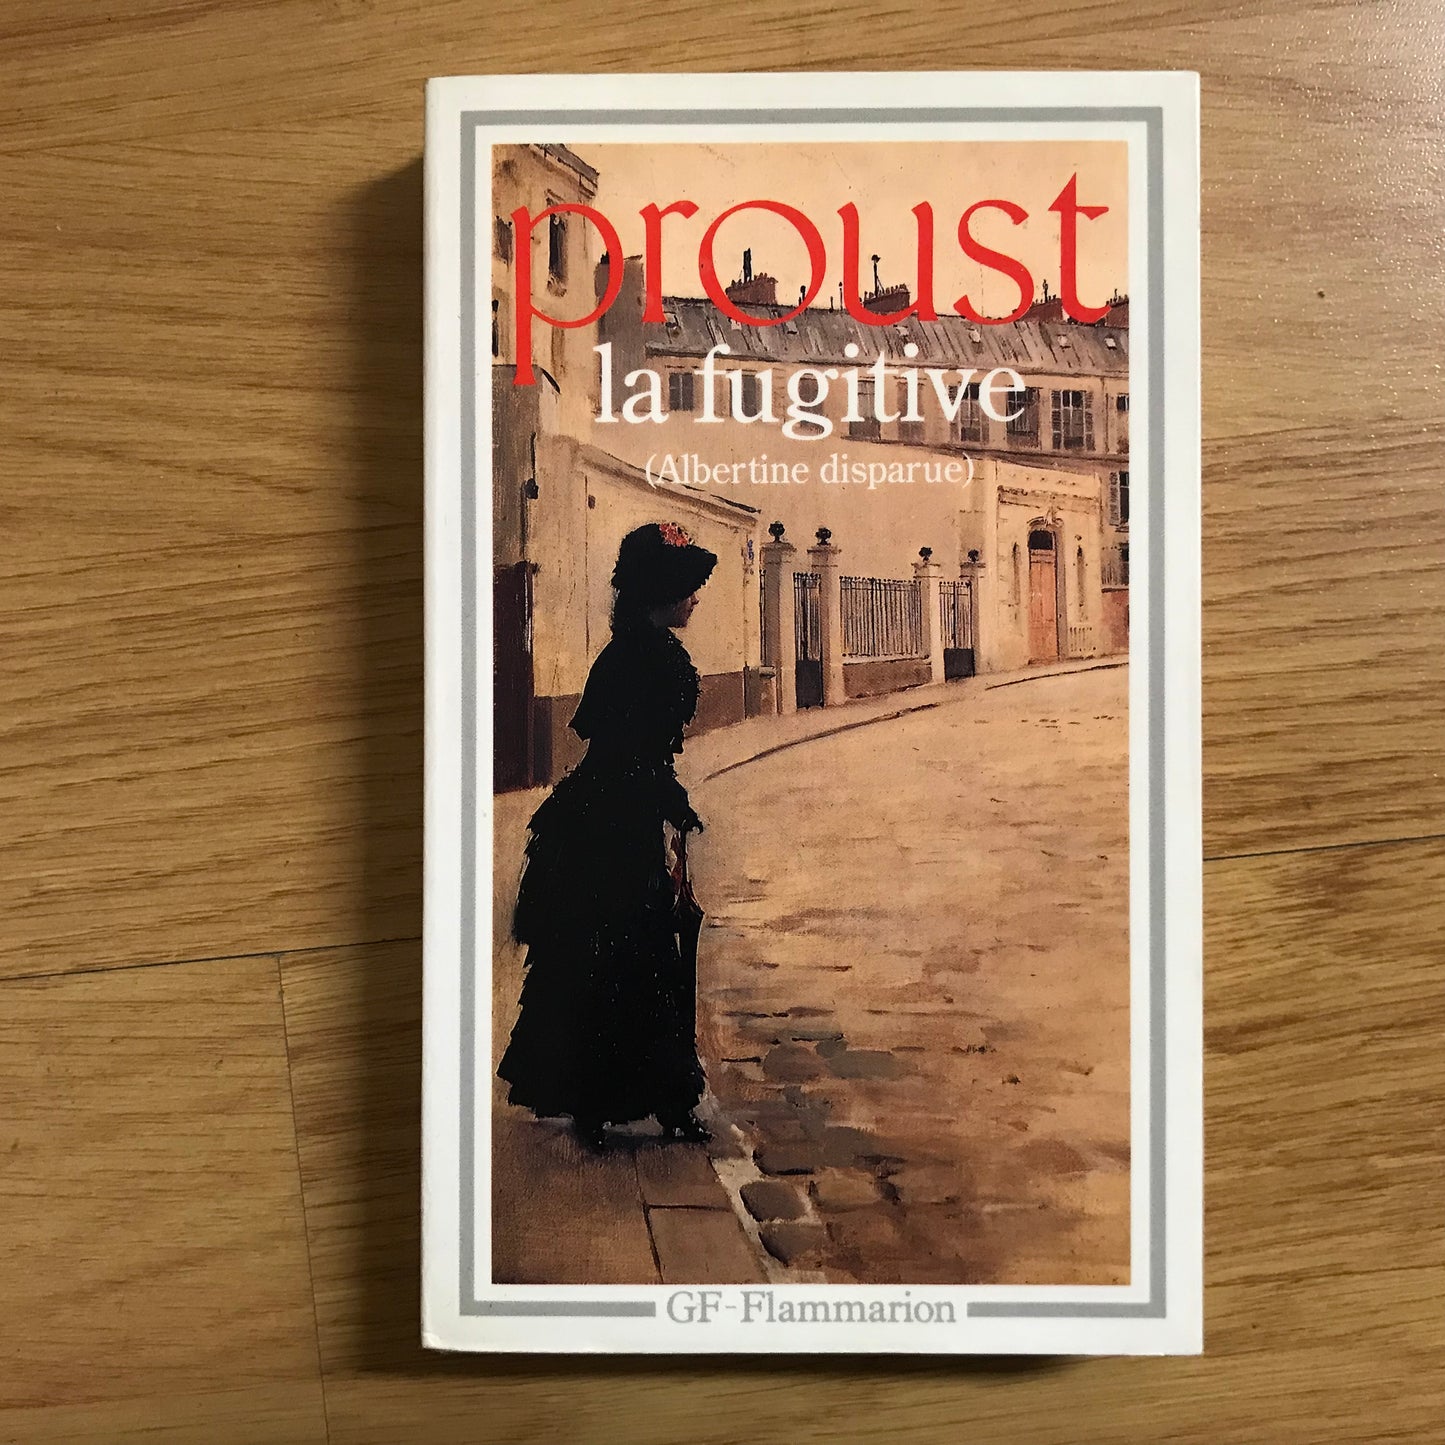 Proust - À la recherche du temps perdu volume 6: La fugitive (Albertine disparue)